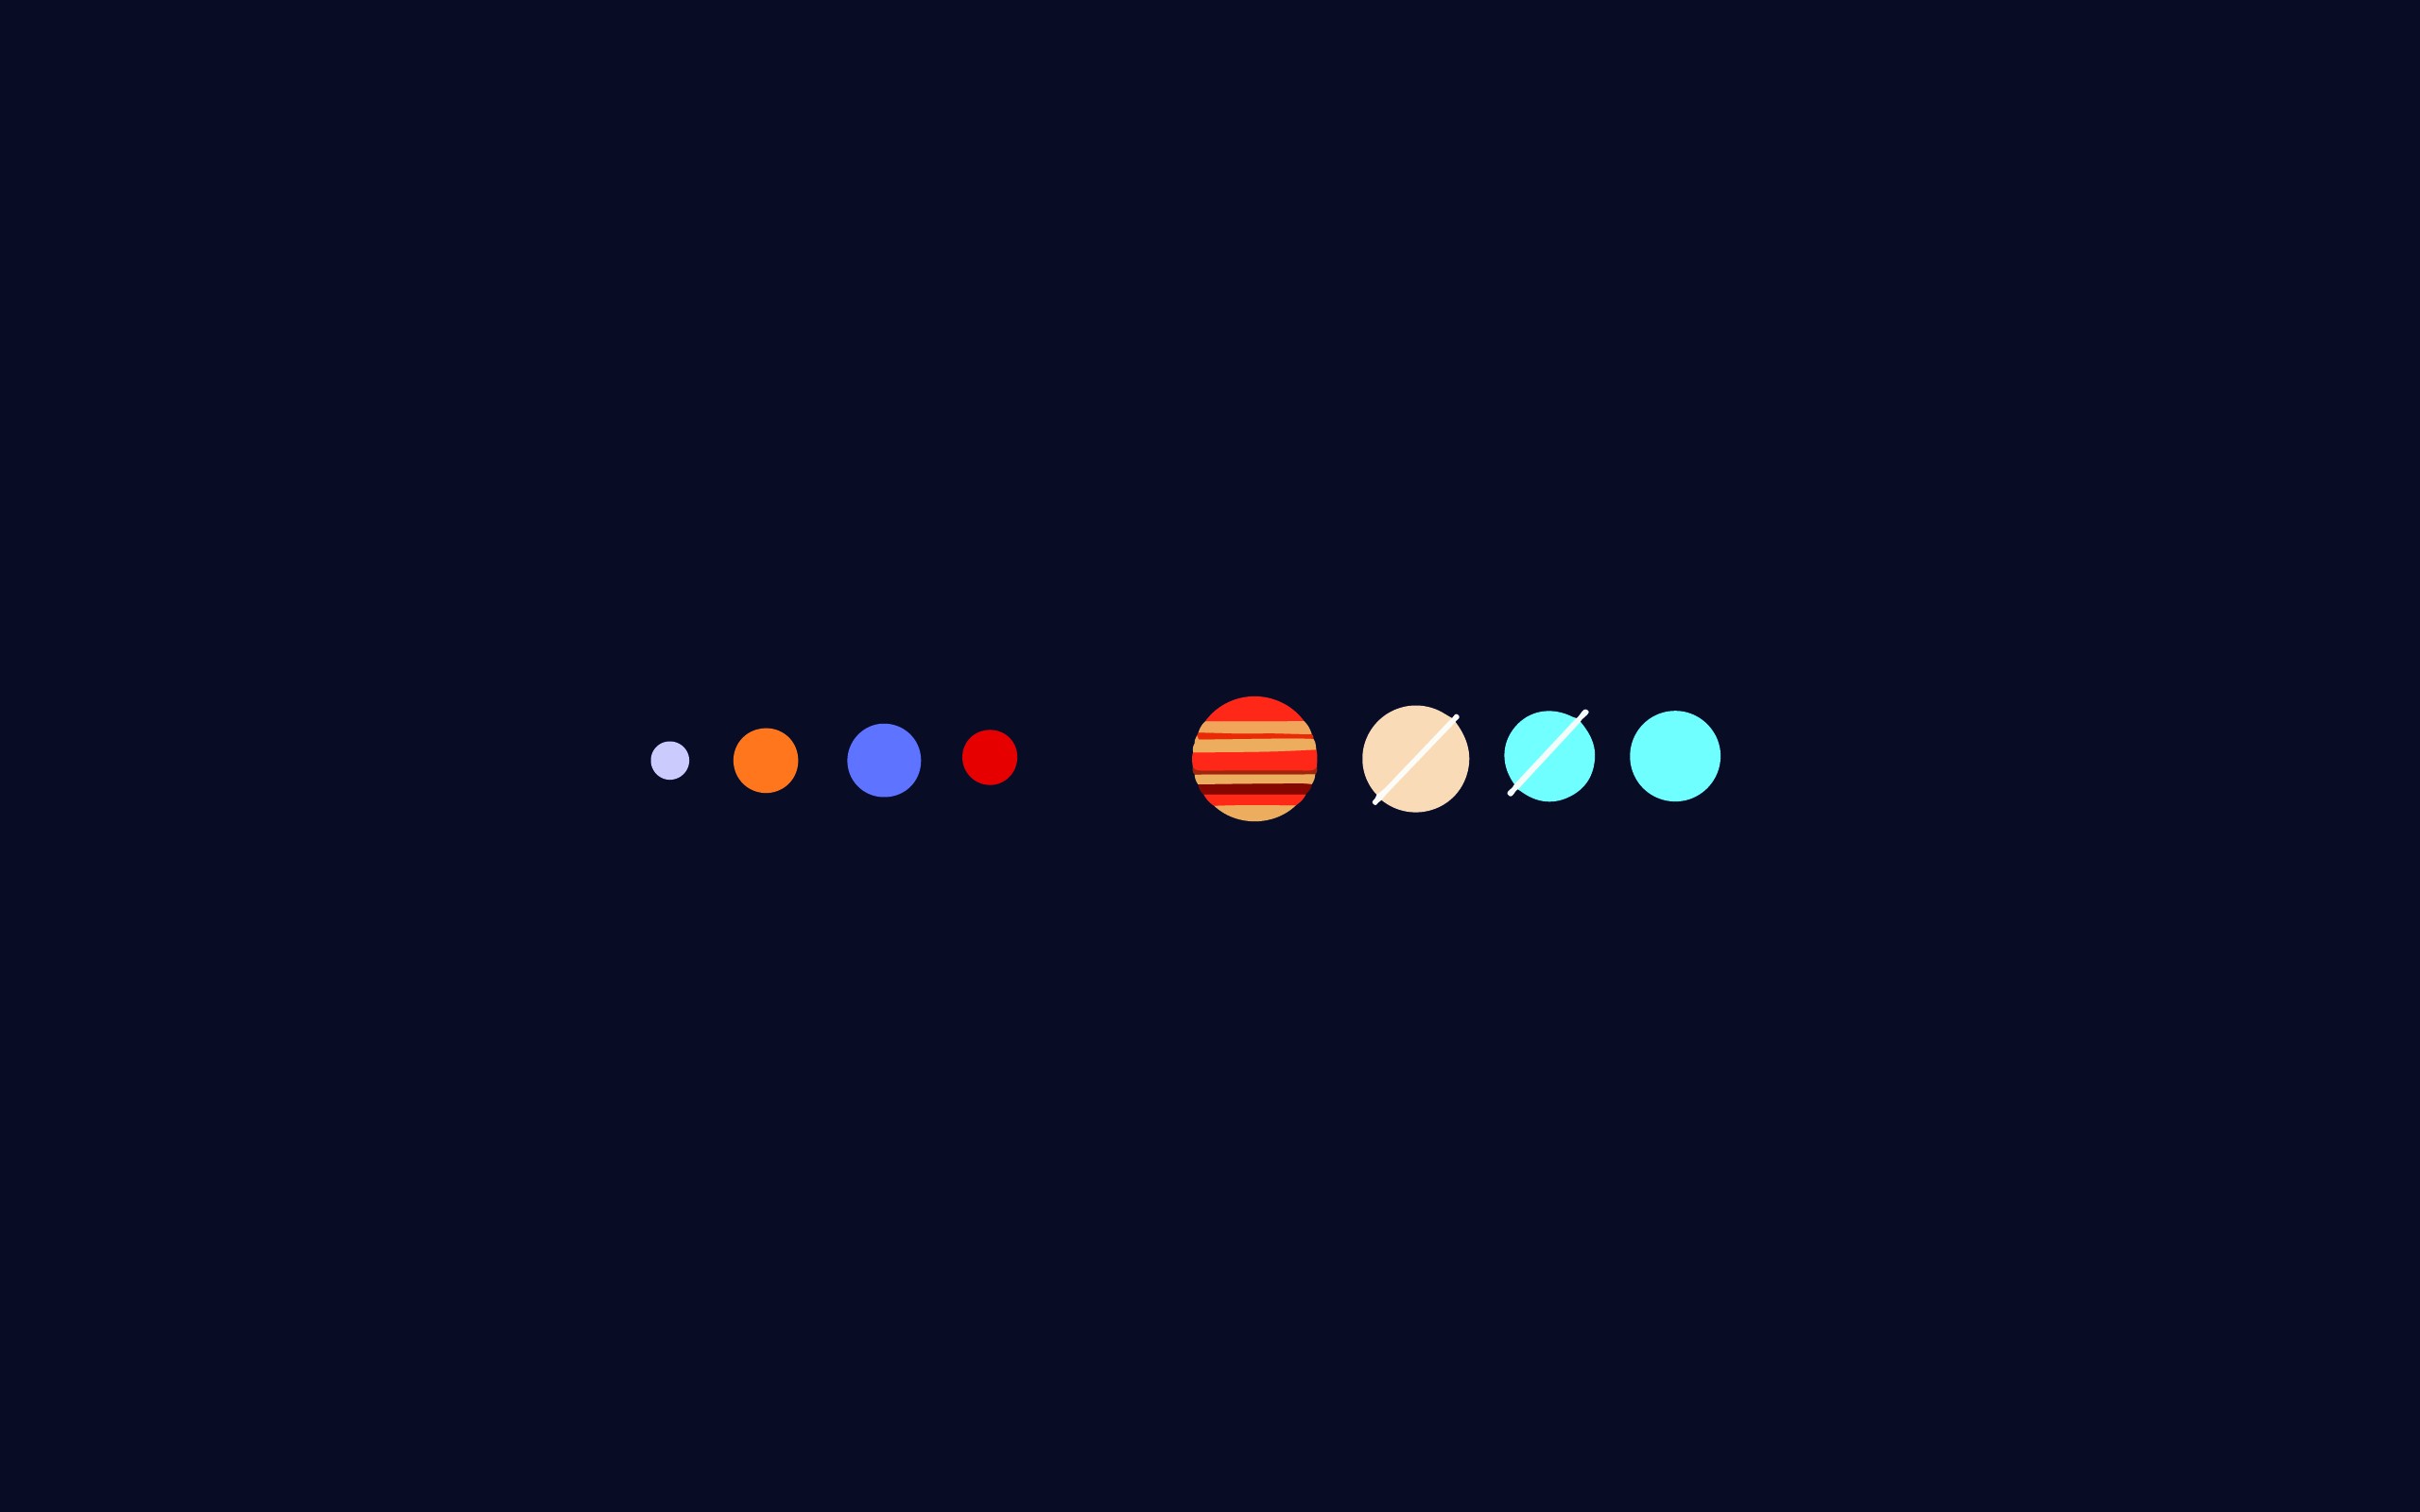 The Solar System I